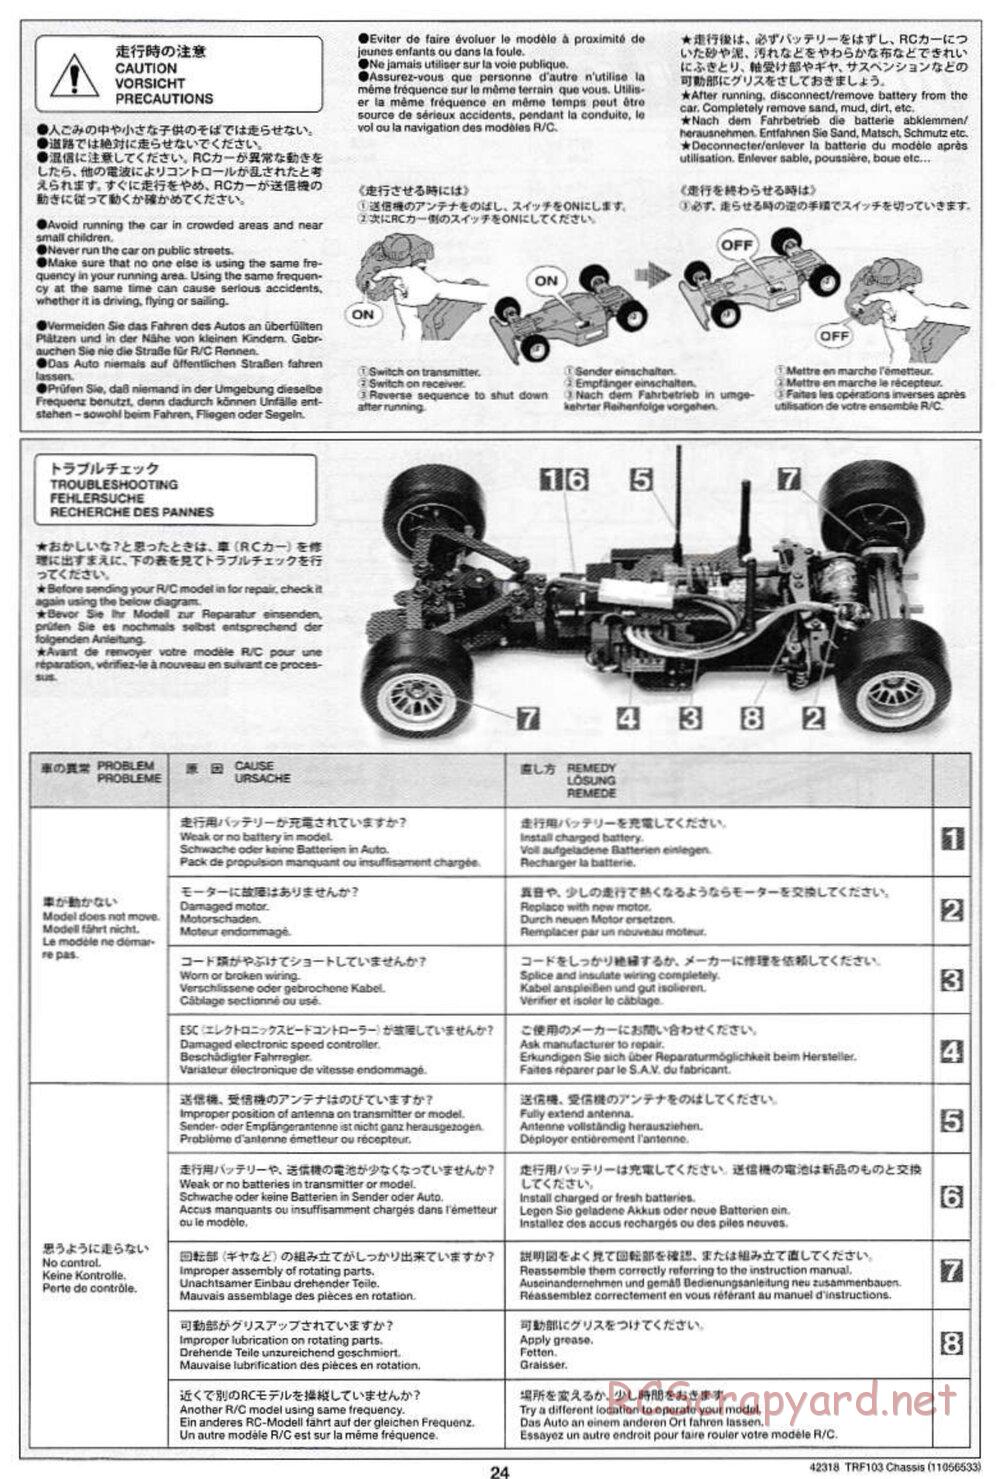 Tamiya - TRF103 Chassis - Manual - Page 24